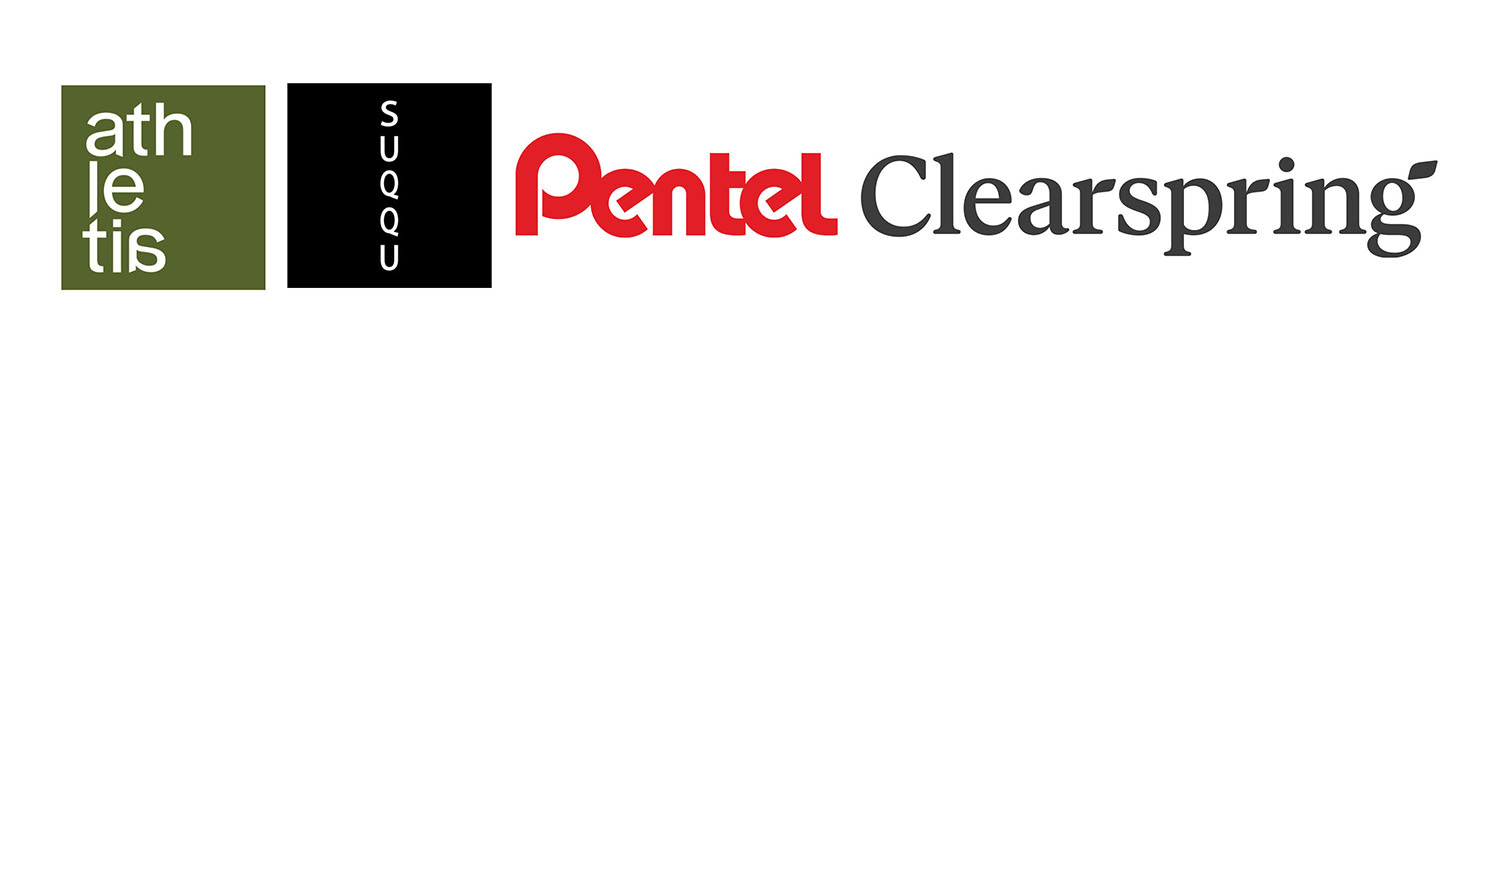 athletia, suqqu, Pentel Clearspring logos.